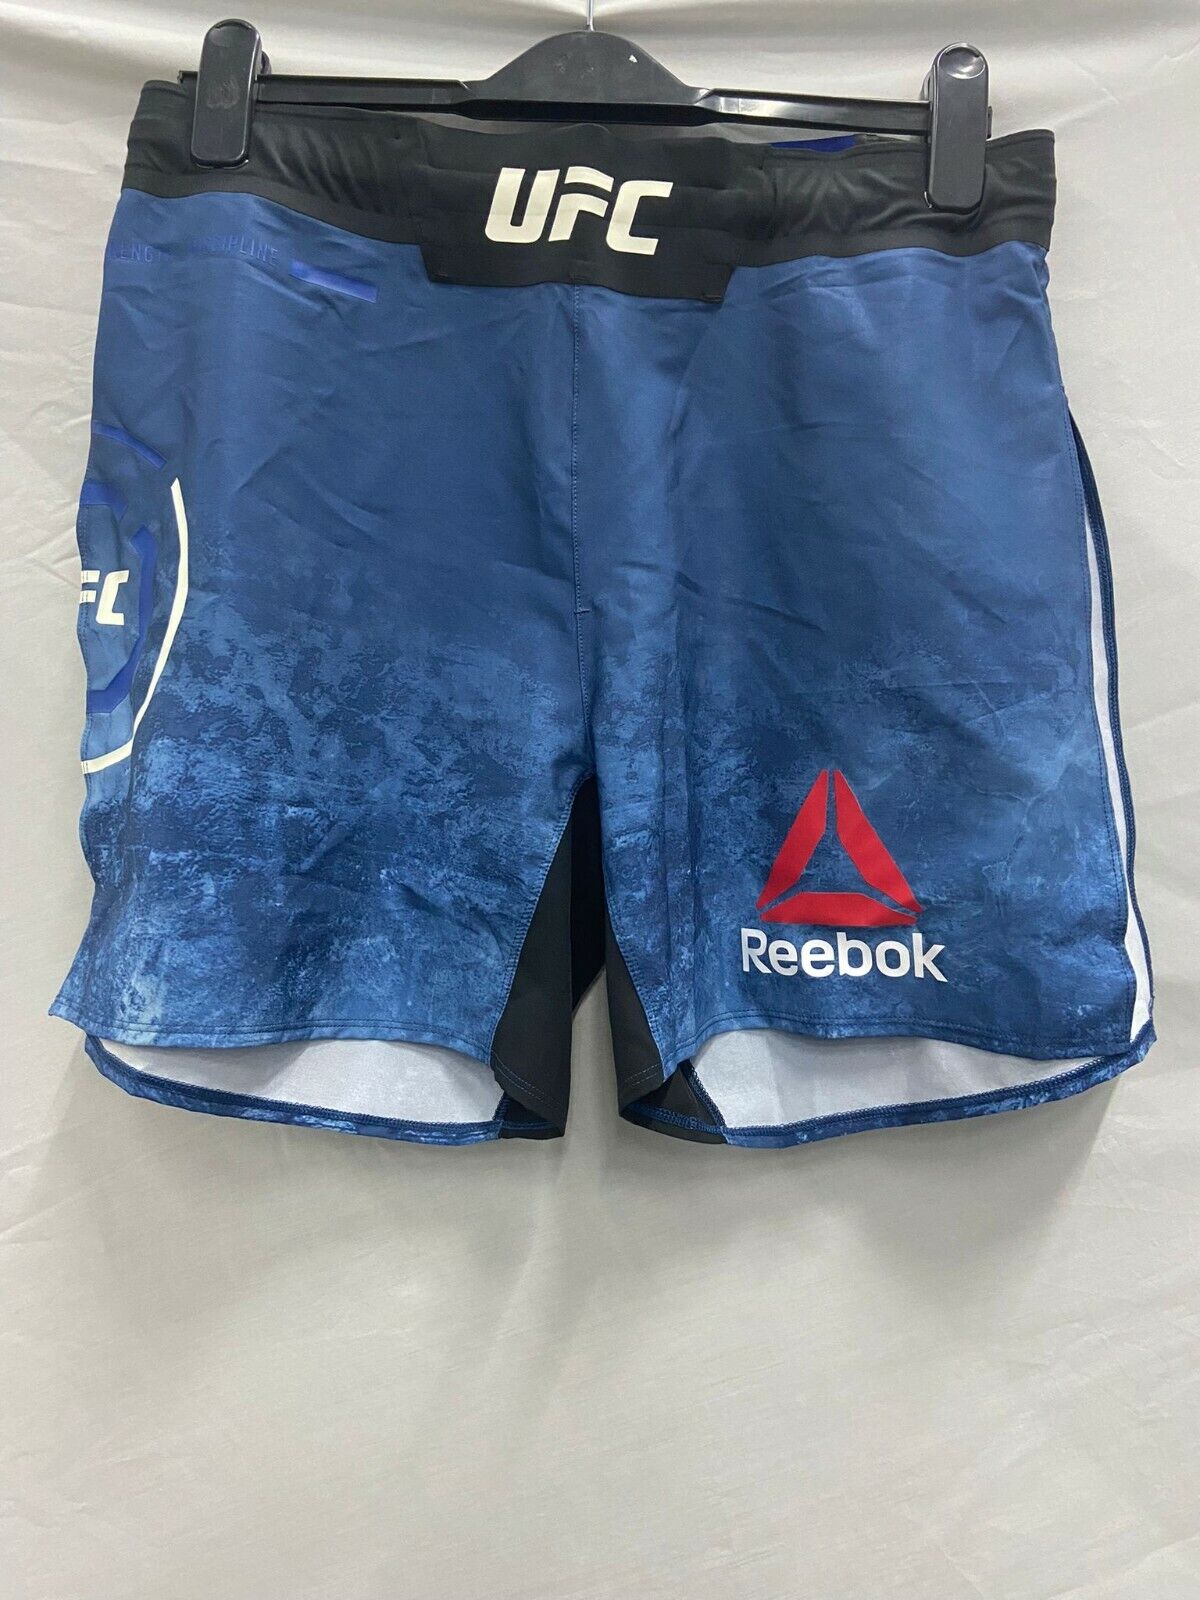 UFC Reebok Gladiator Shorts, MMA Gladiator Shorts